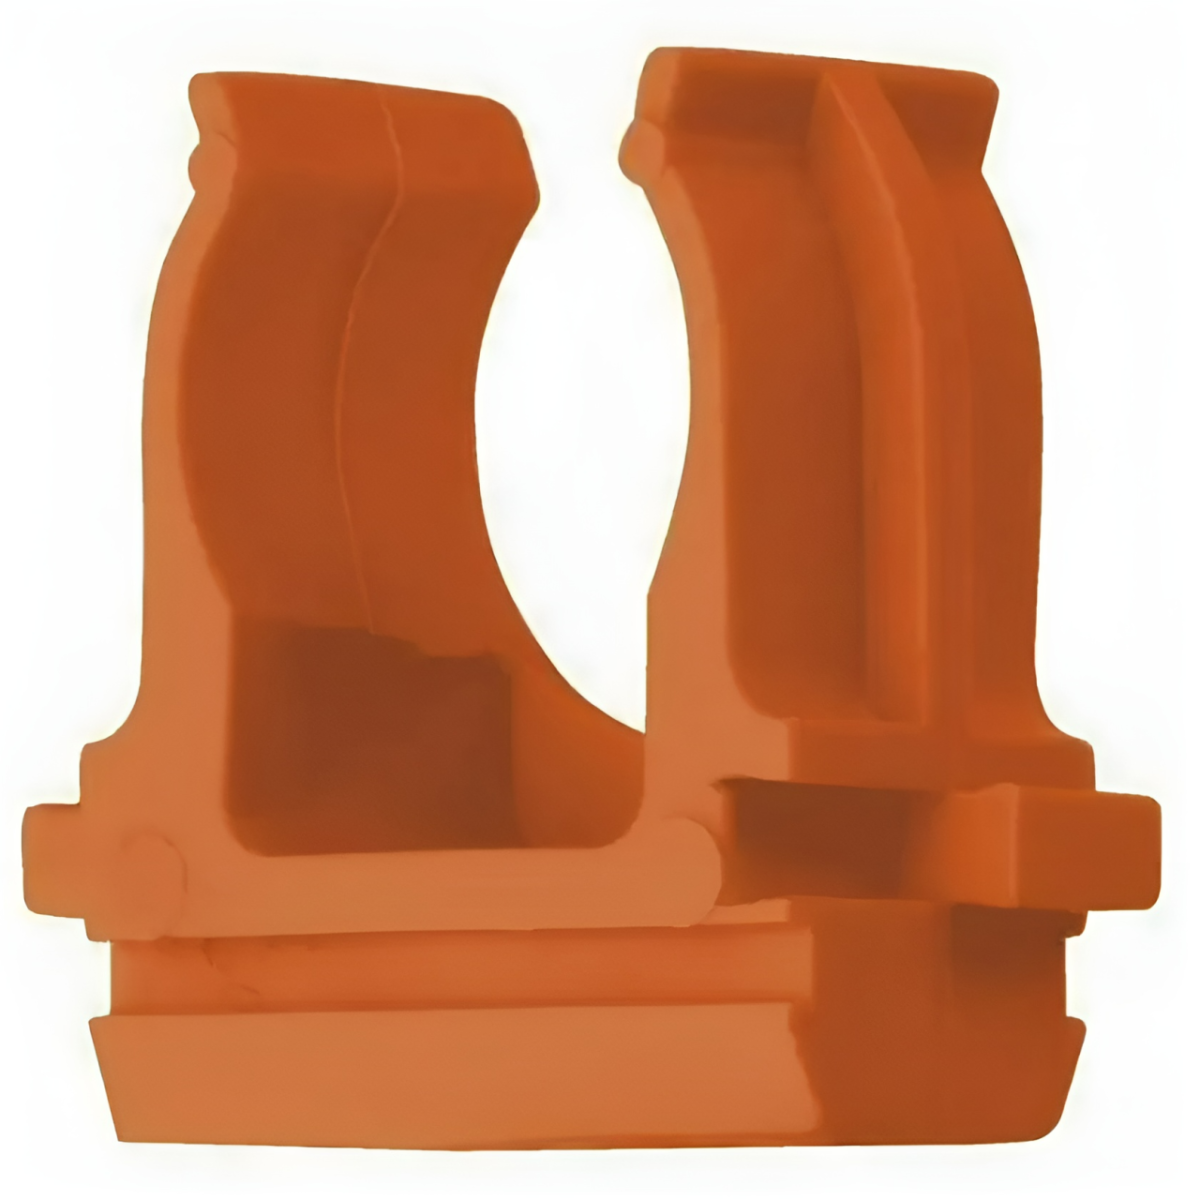 Ekf plast гофра. Крепеж клипса оранжевая d25 мм Plast proxima. Клипса оранжевая 20 ДКС. Крепеж-клипса для труб d16 мм. Крепеж-клипса 16мм EKF.